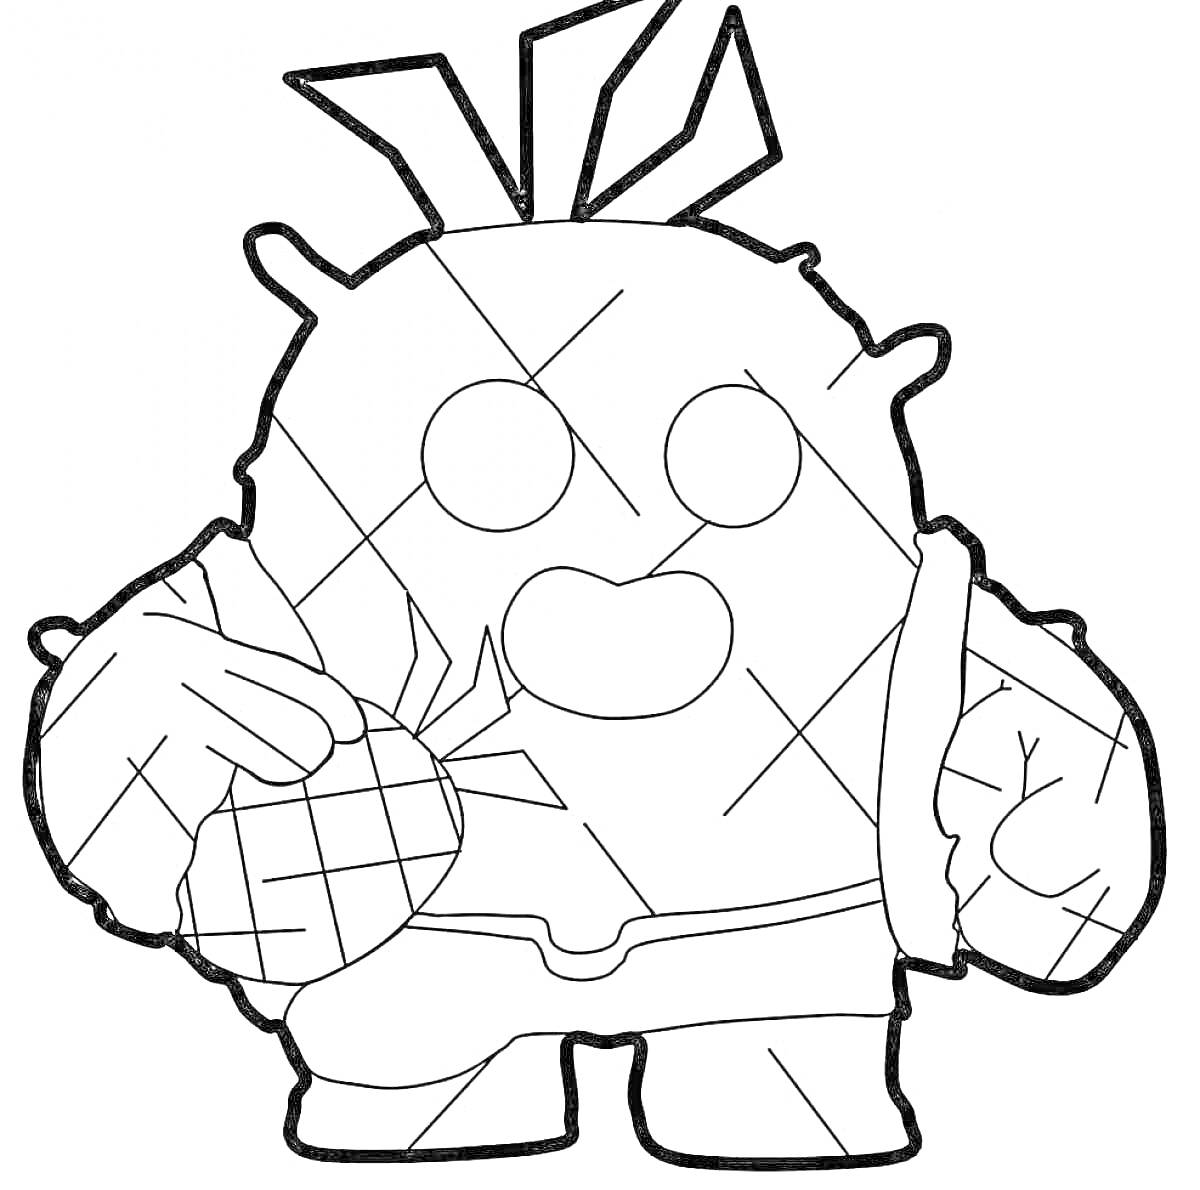 Раскраска Раскраска персонажа Спайк из игры Браво Старс с гранатой из кактуса